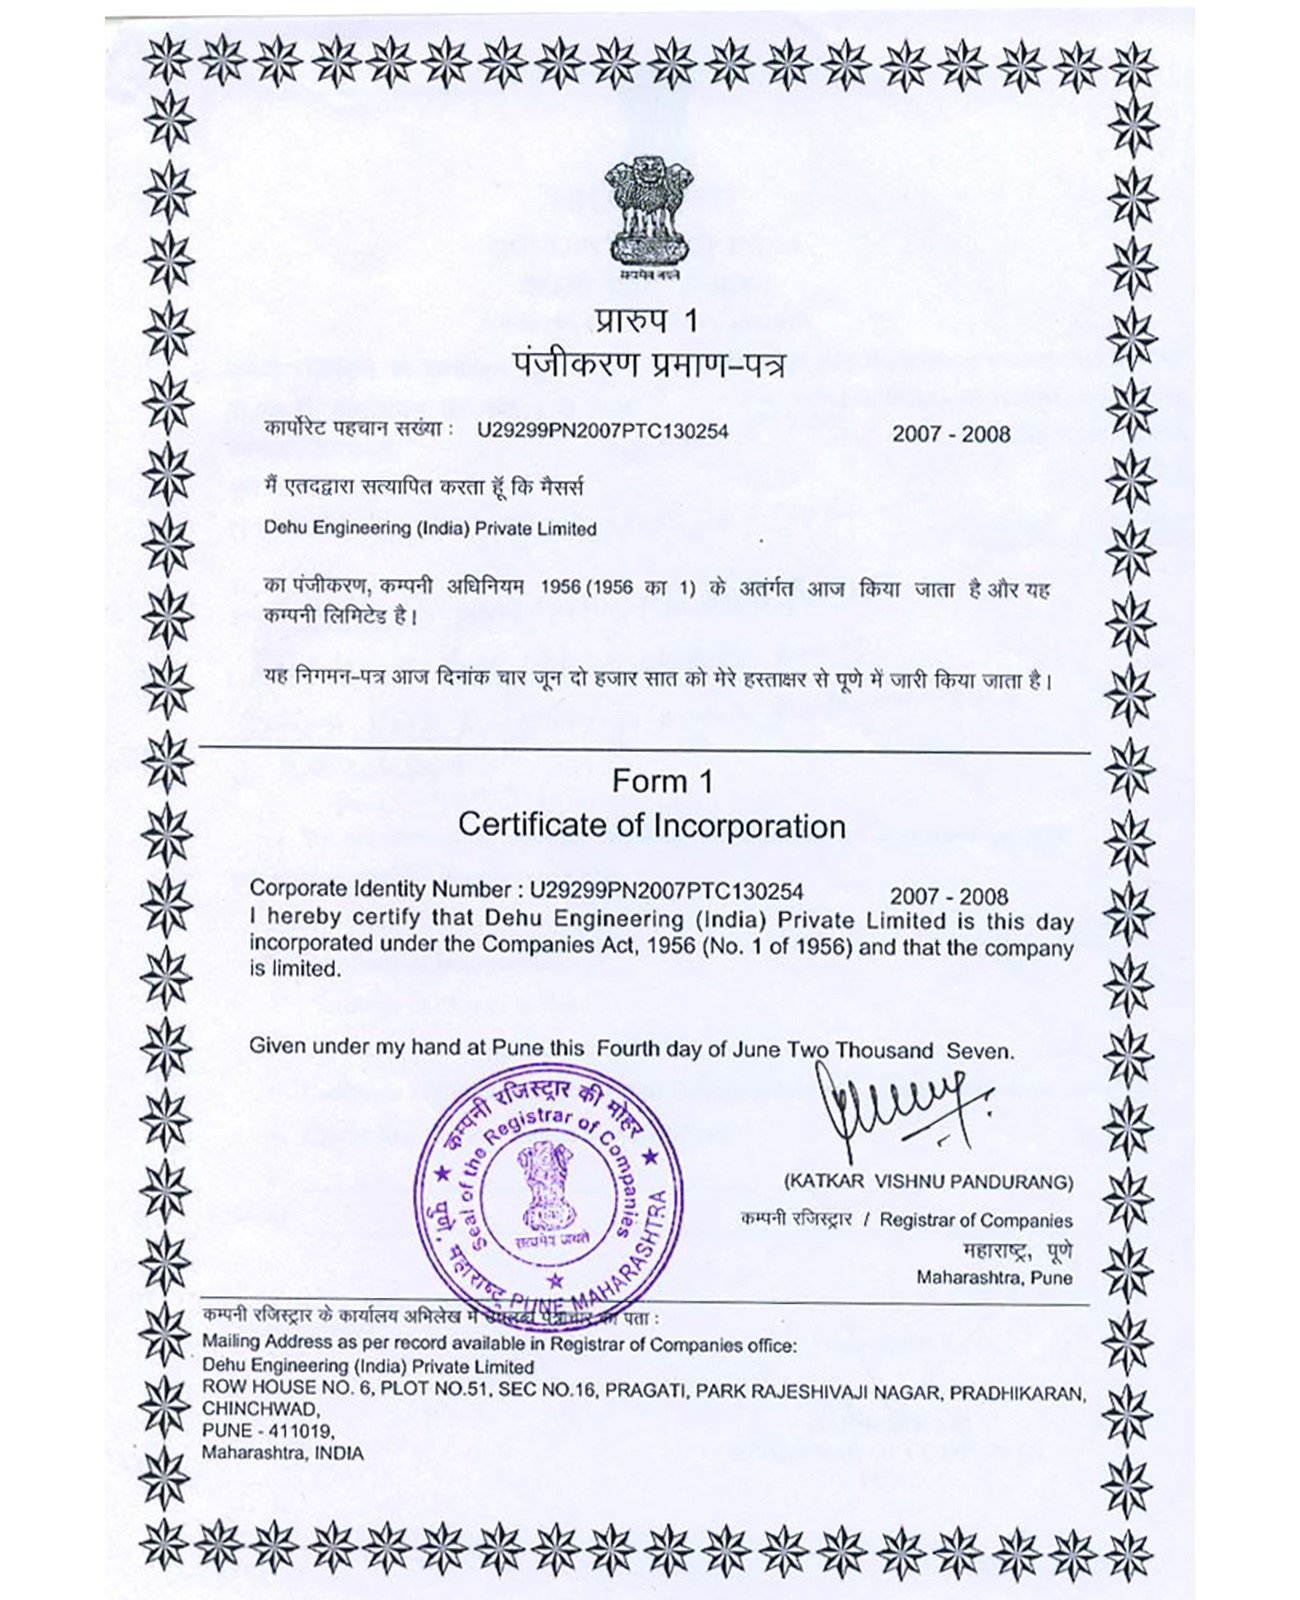 1. Company Registration Certificates